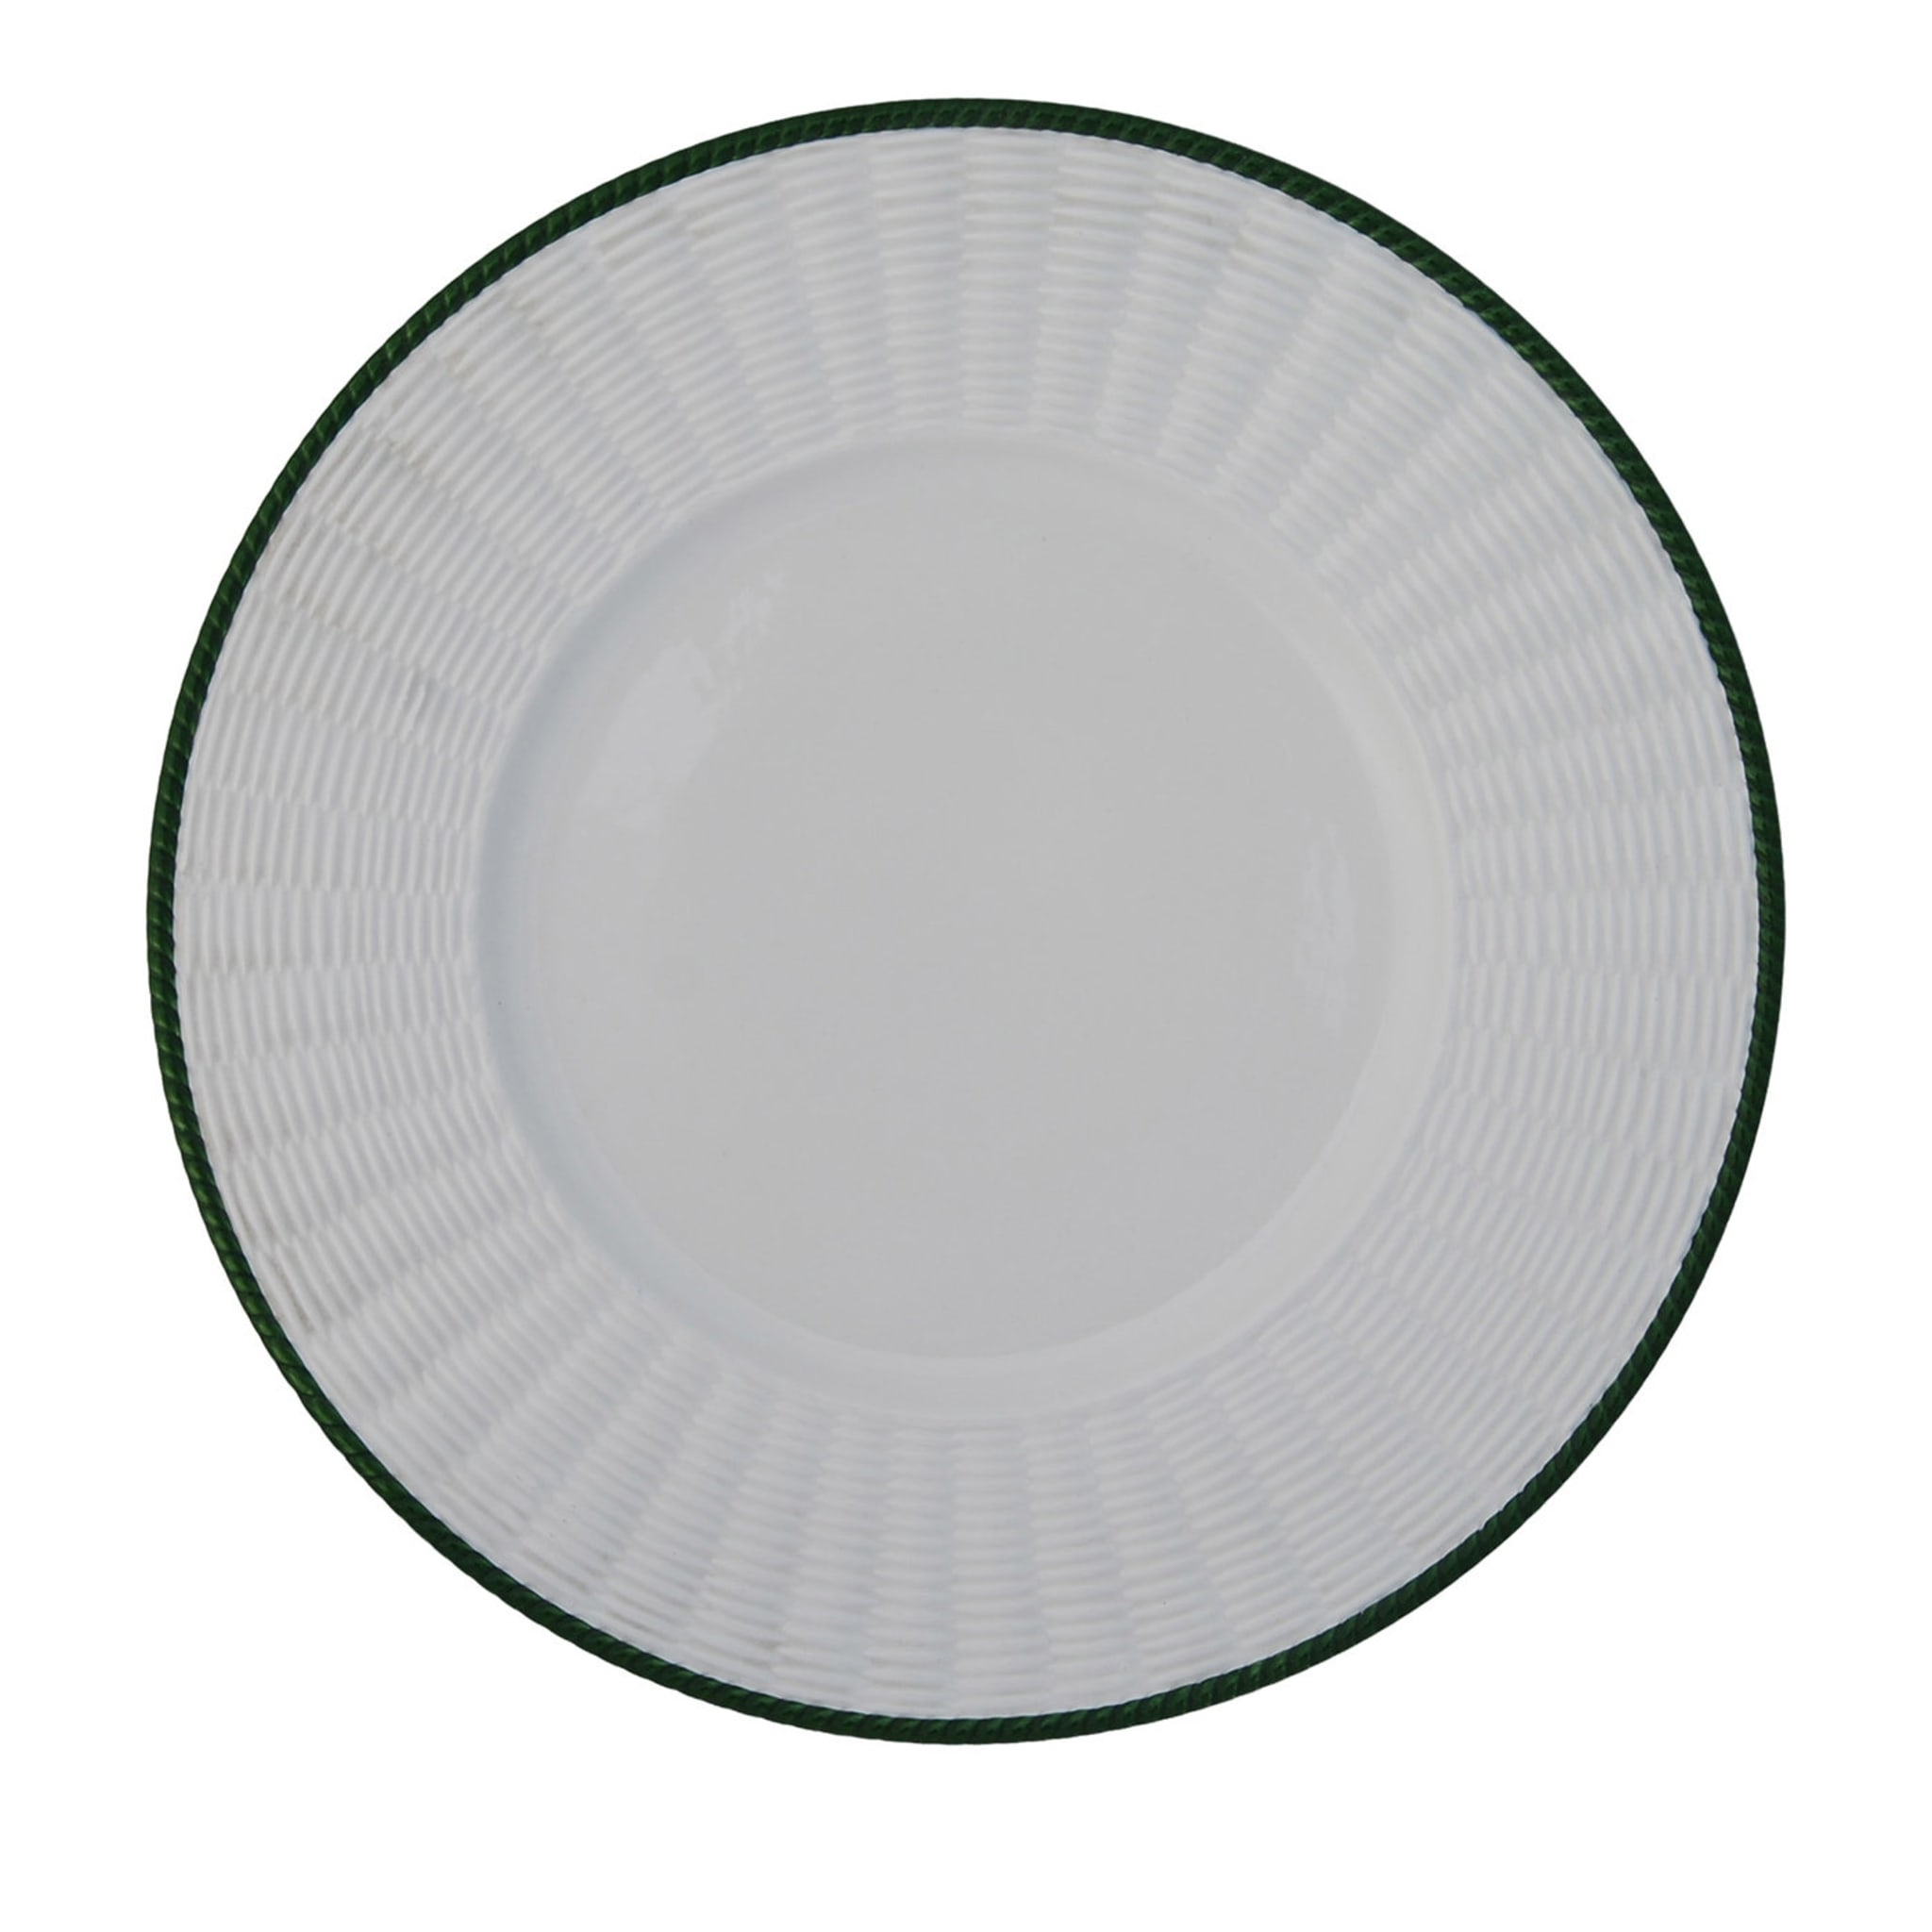 Set of 4 Green Wicker Ceramic Plates - Main view